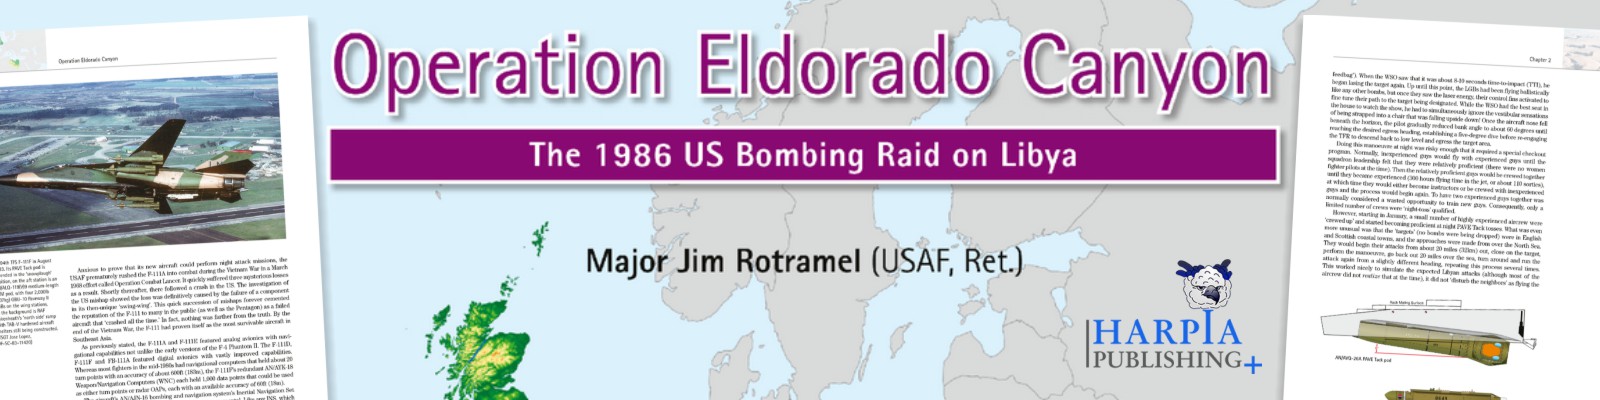 Harpia Publishing | Operation Eldorado Canyon: Der US-Bombenangriff auf Libyen 1986